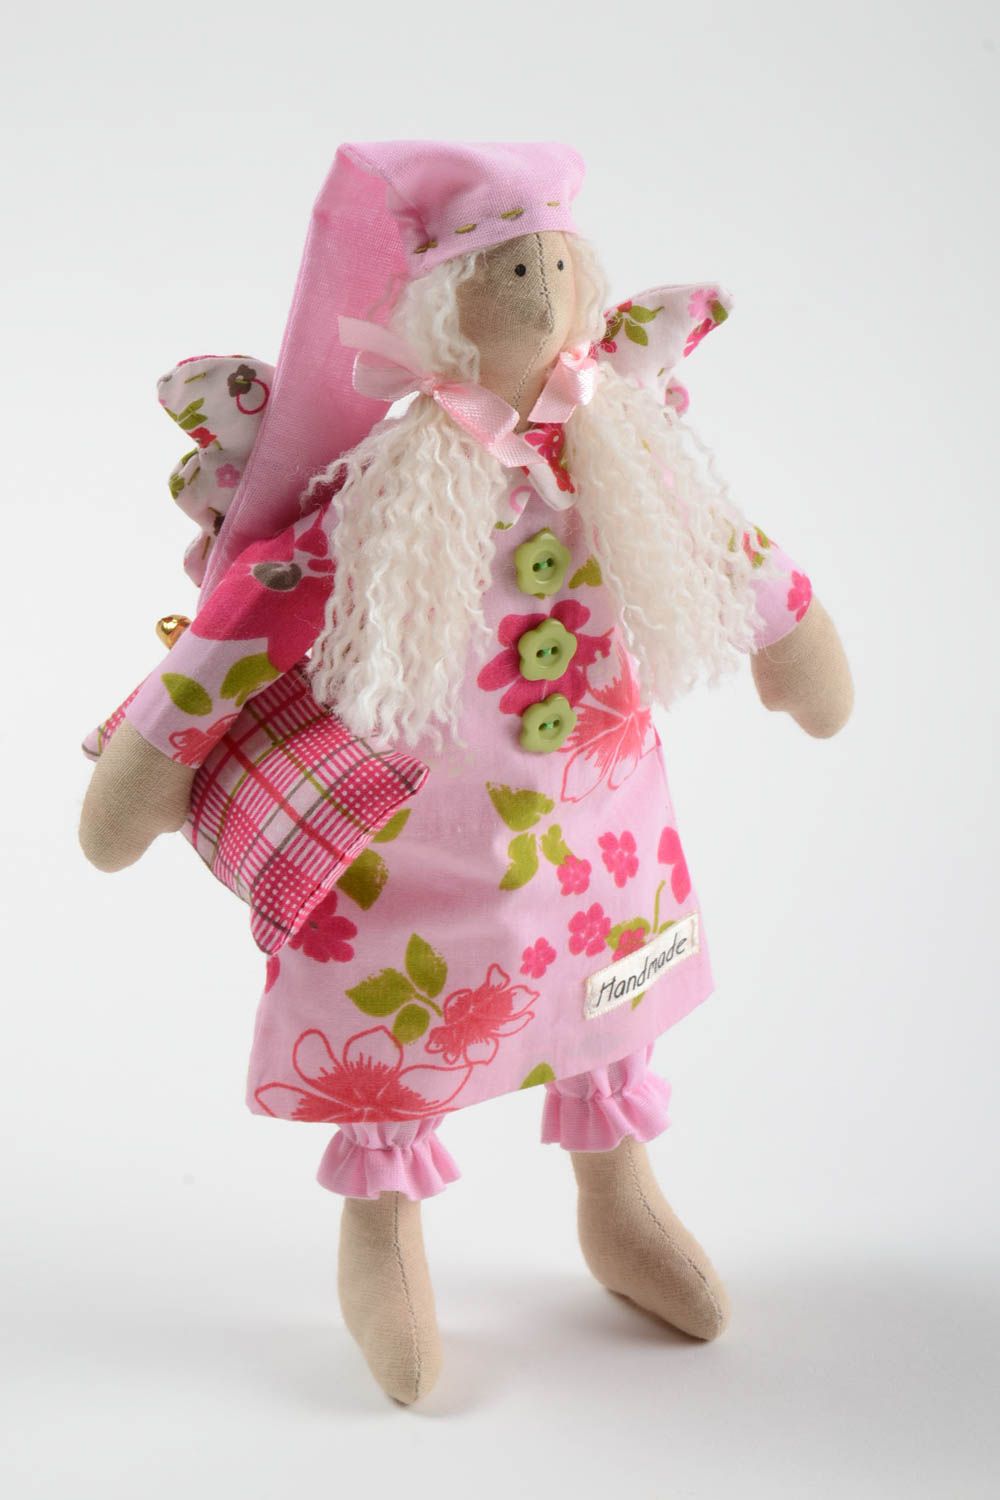 Beautiful handmade interior doll fabric soft toy rag doll designs gift ideas photo 2